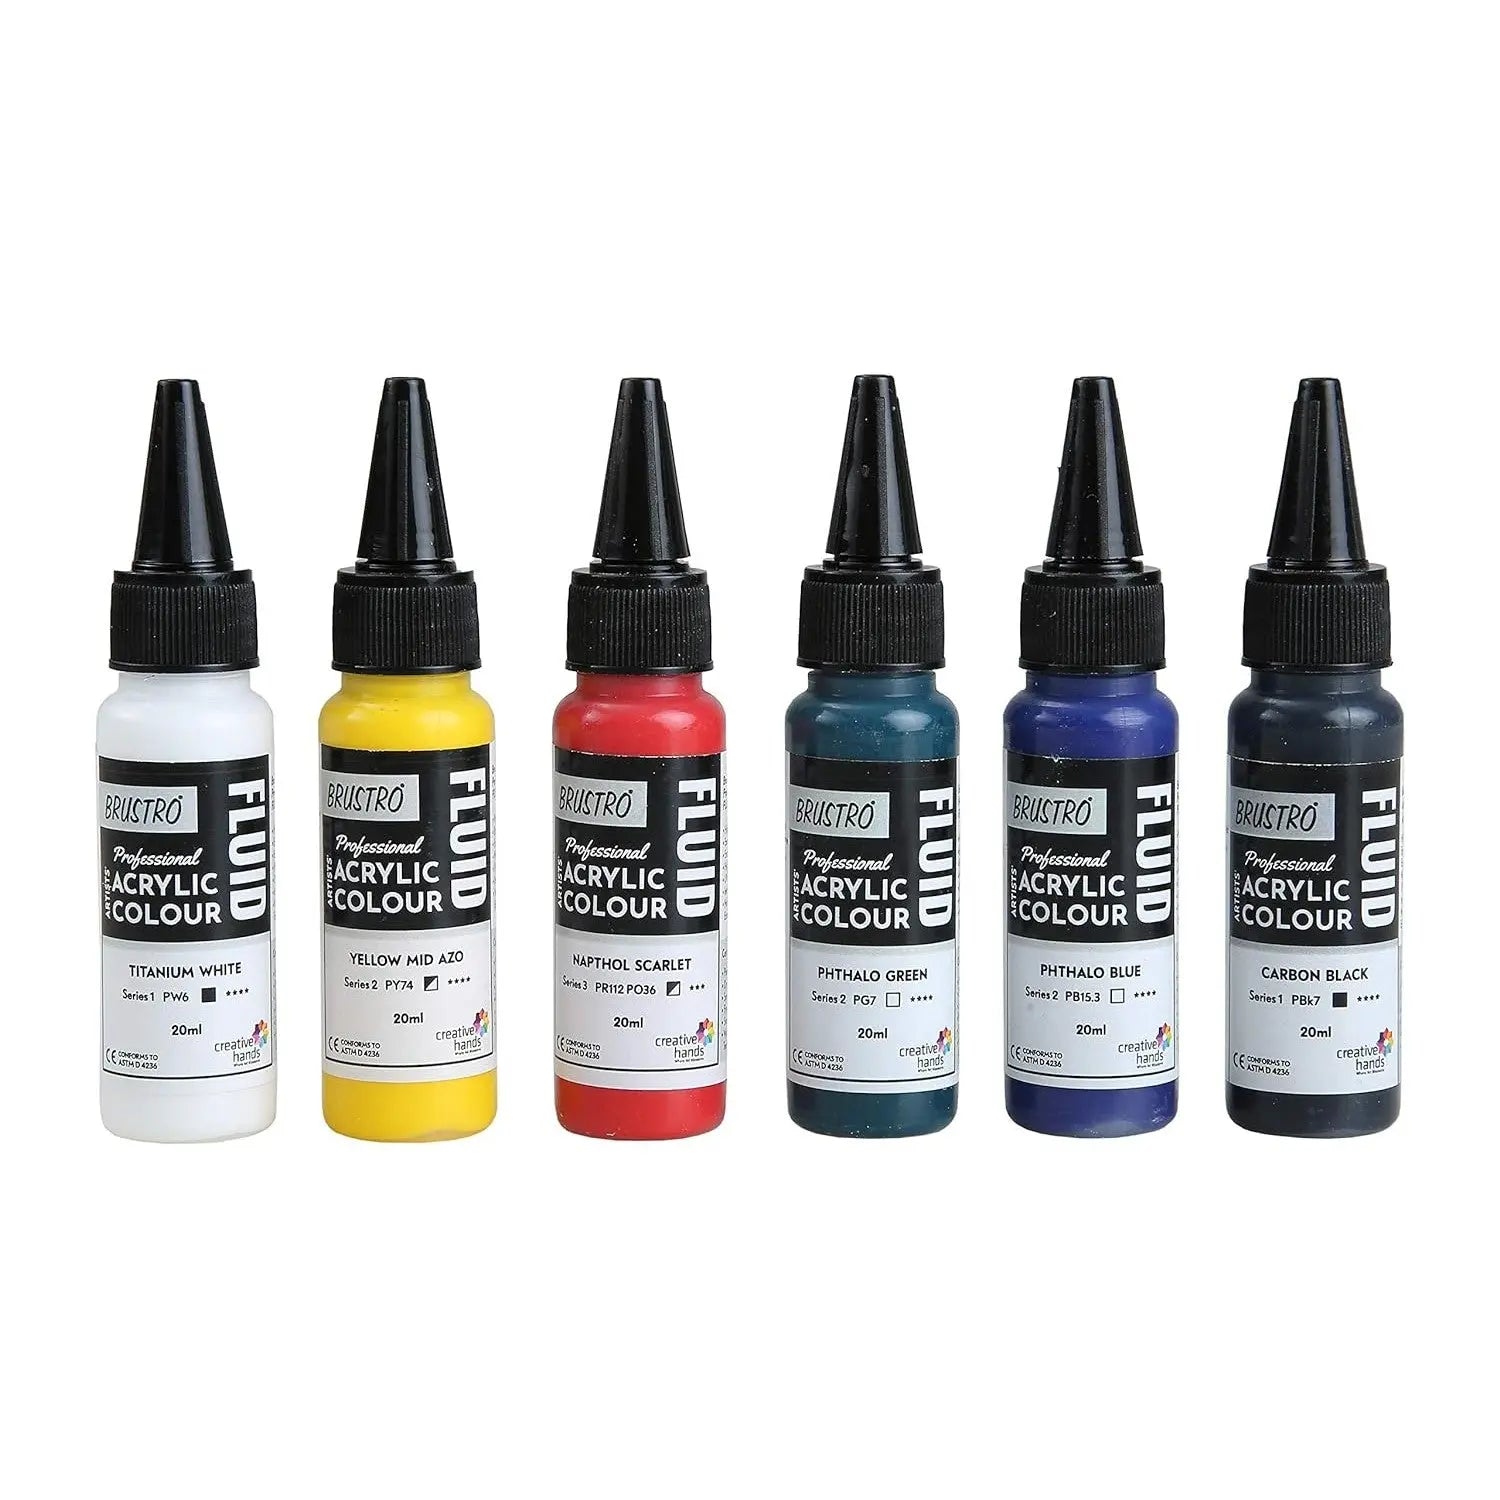 Brustro Professional Artists Acrylic Colour Fluid 20ml Pack Of 5+1 Brustro